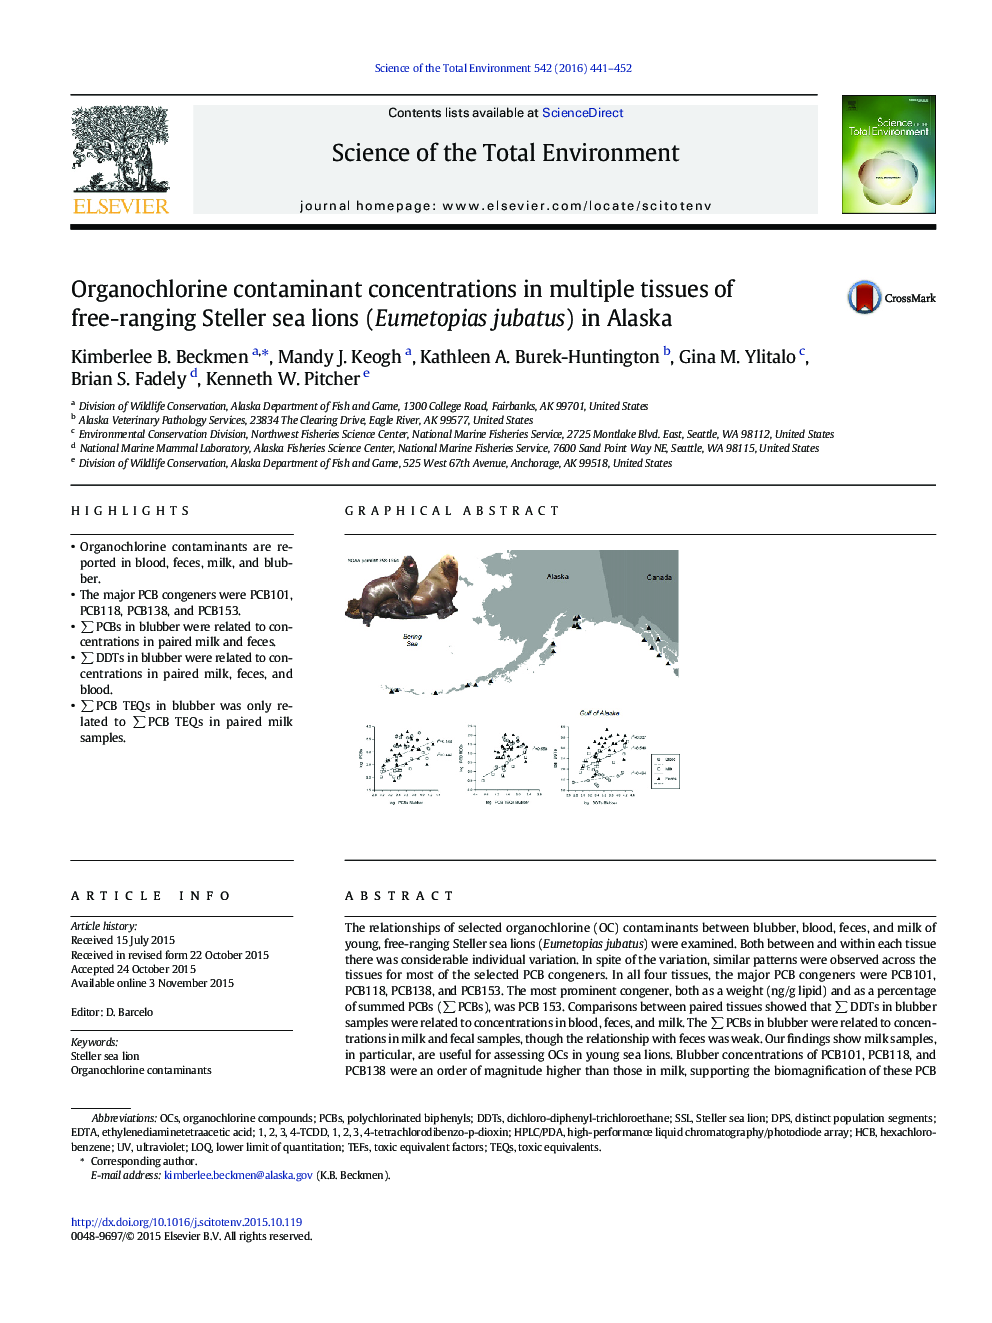 Organochlorine contaminant concentrations in multiple tissues of free-ranging Steller sea lions (Eumetopias jubatus) in Alaska